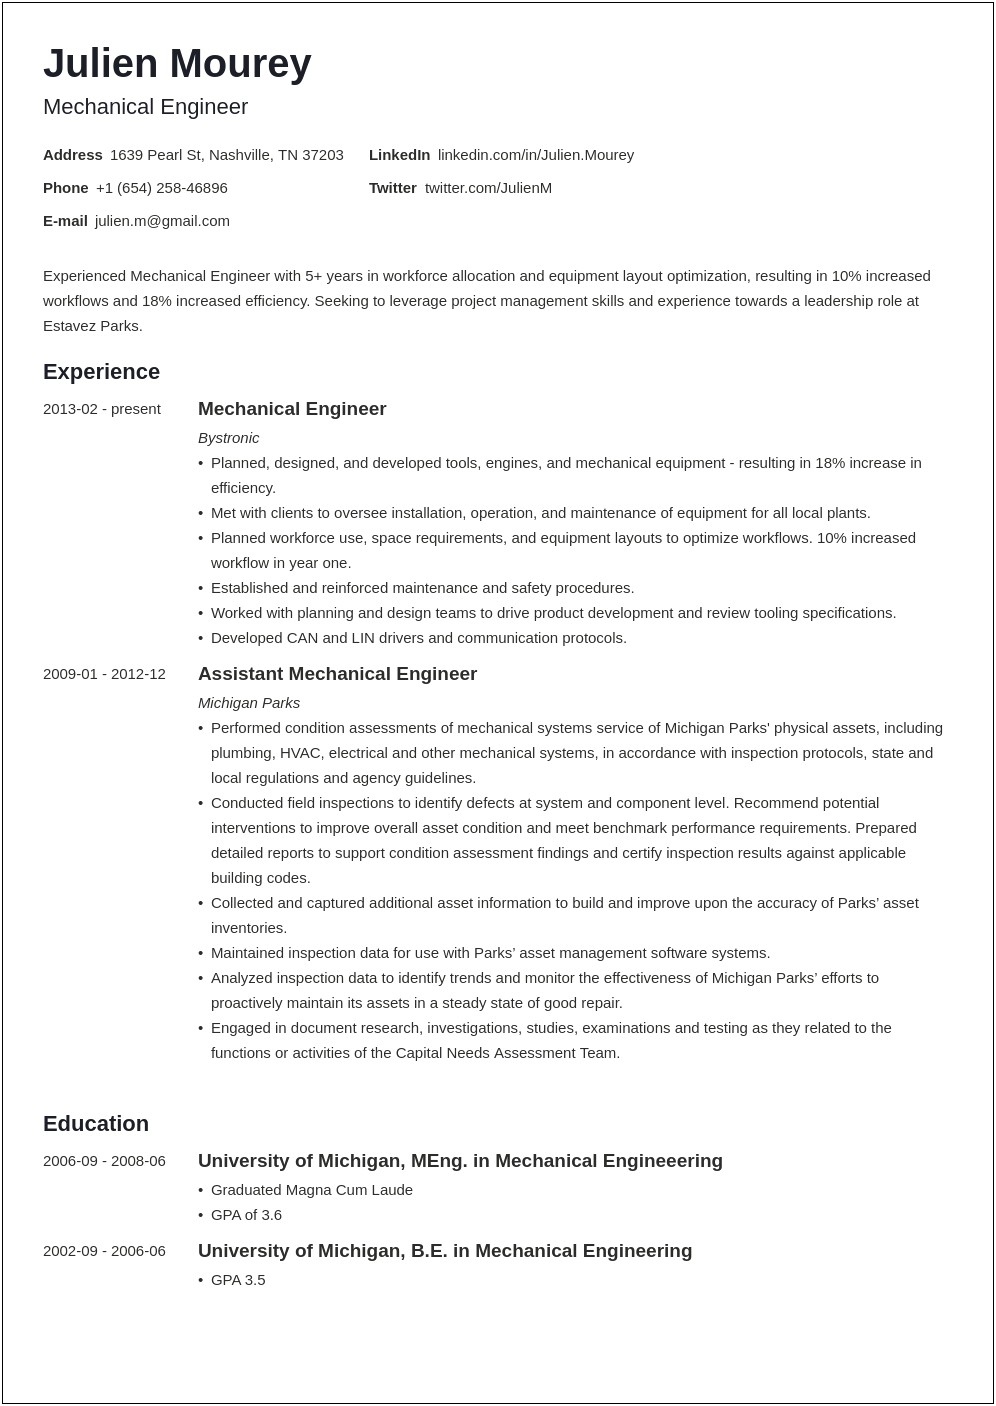 Resume Summary For Mechanical Engineer Fresher